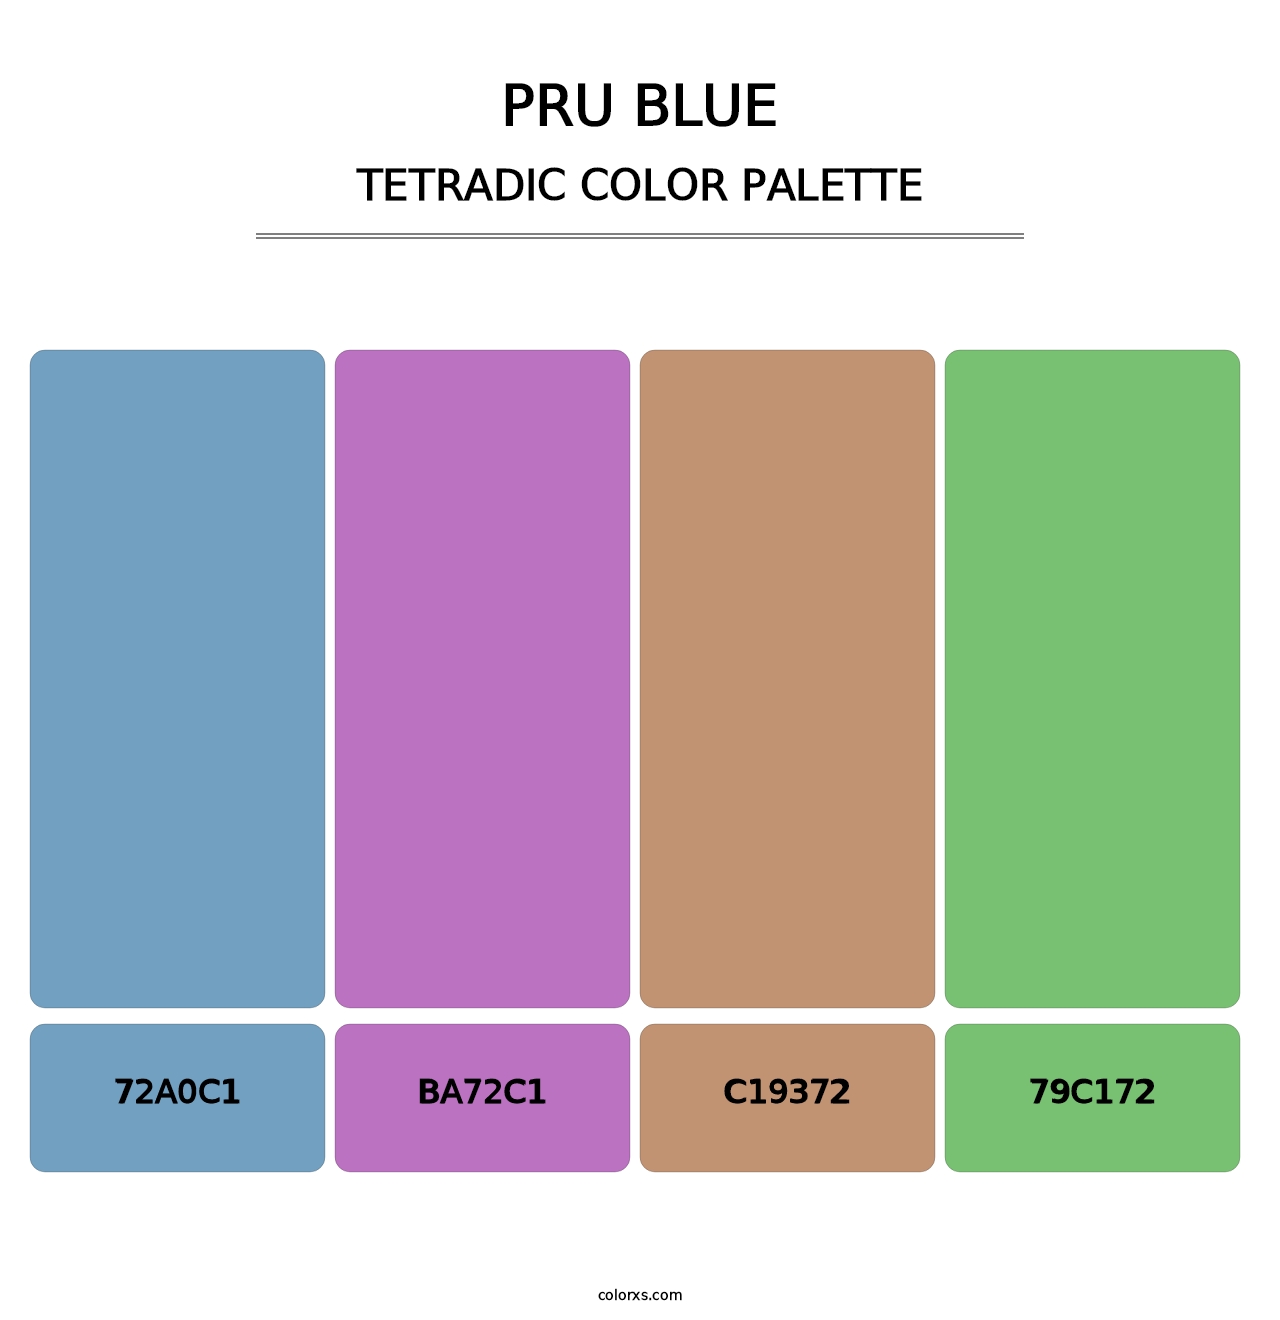 PRU Blue - Tetradic Color Palette